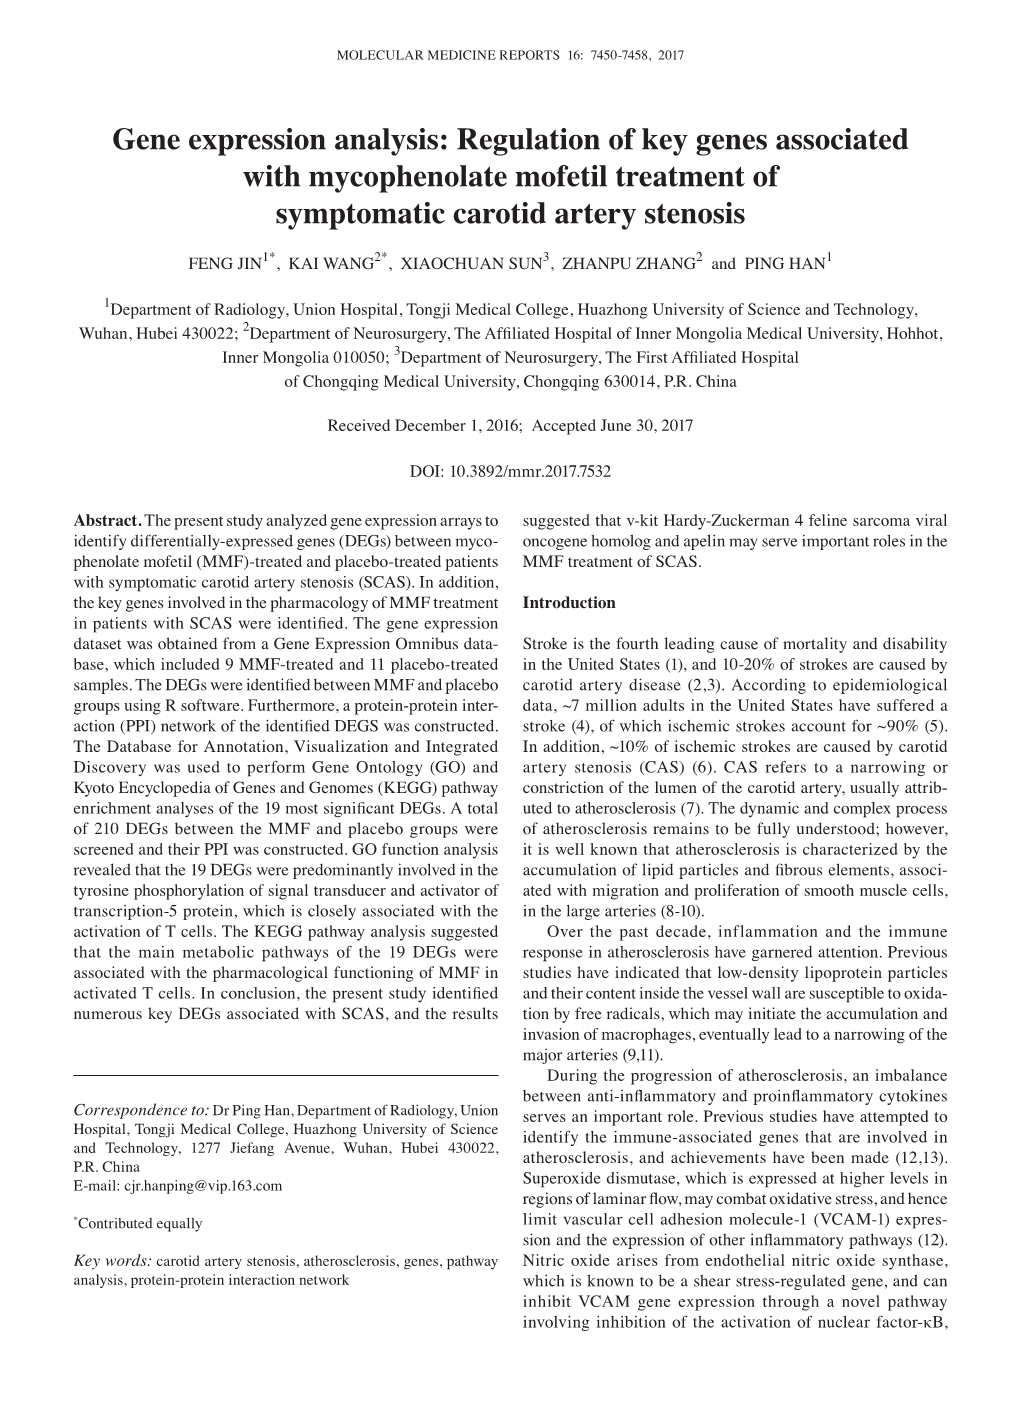 Regulation of Key Genes Associated with Mycophenolate Mofetil Treatment of Symptomatic Carotid Artery Stenosis